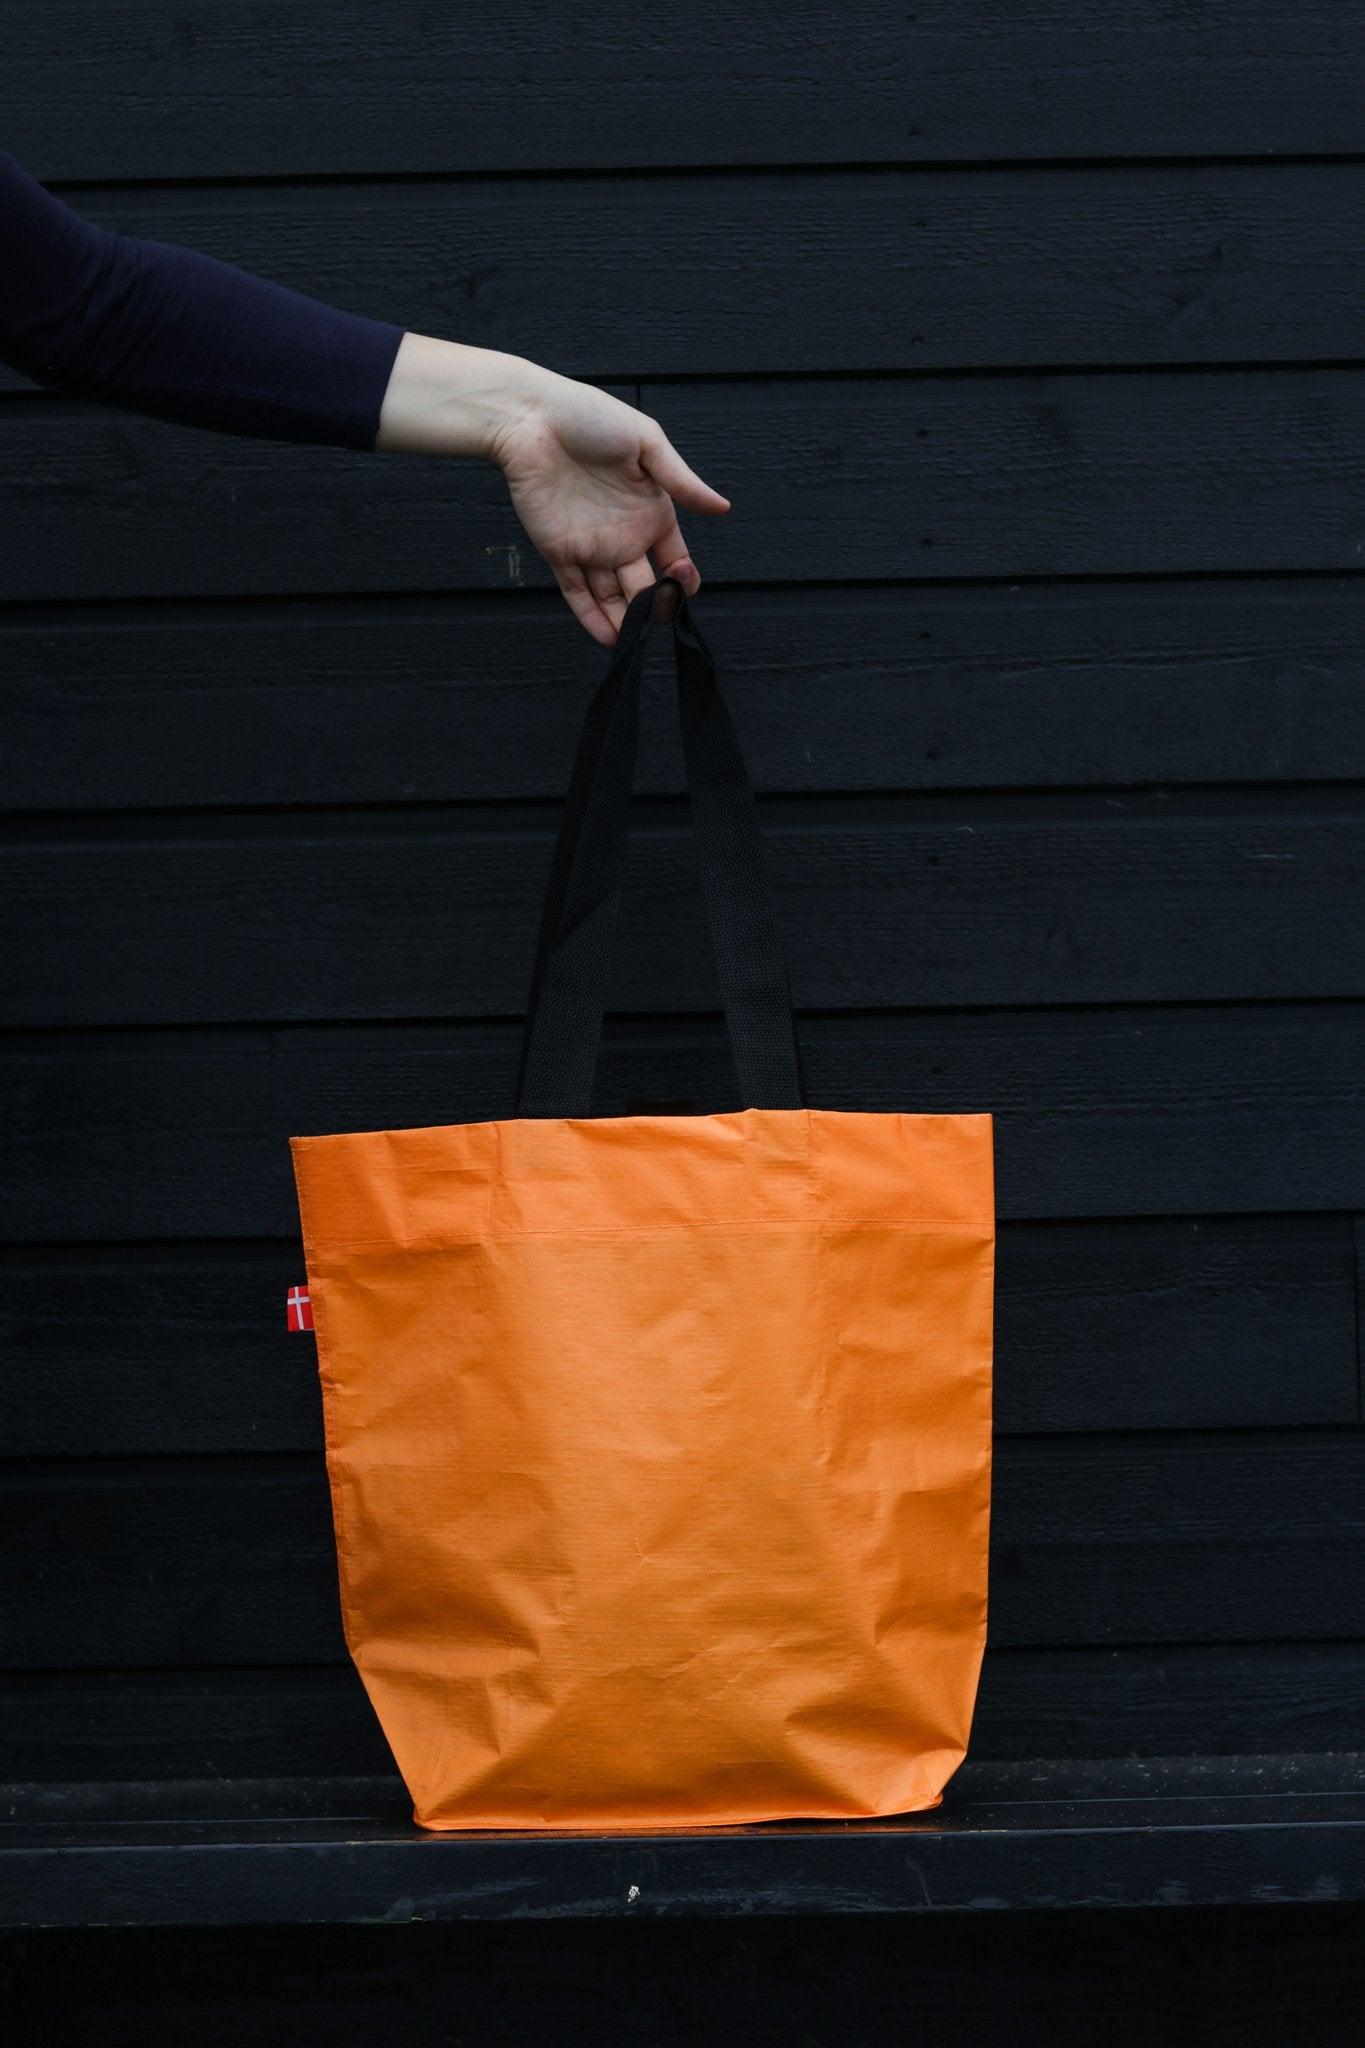 Cobags Bikezac 2.0 - Simply Orange Pannier Bag for Life - Bike Boom